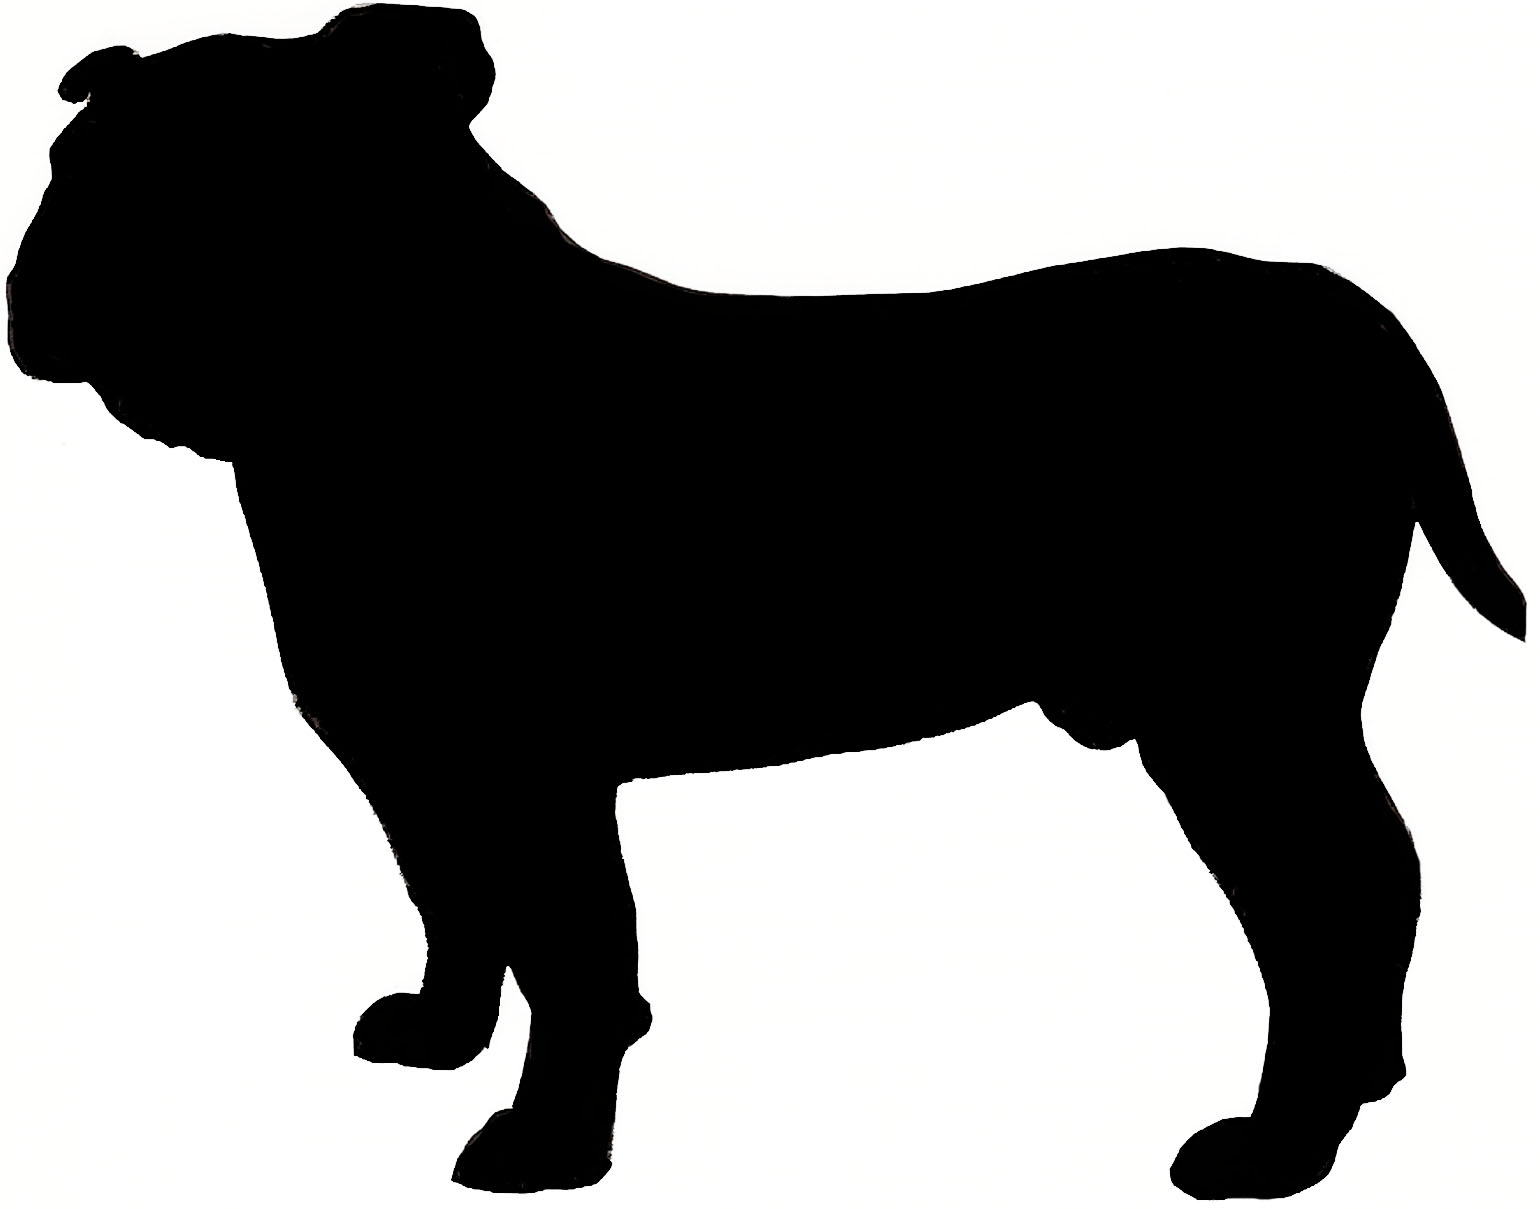 Bulldog silhouette clip art